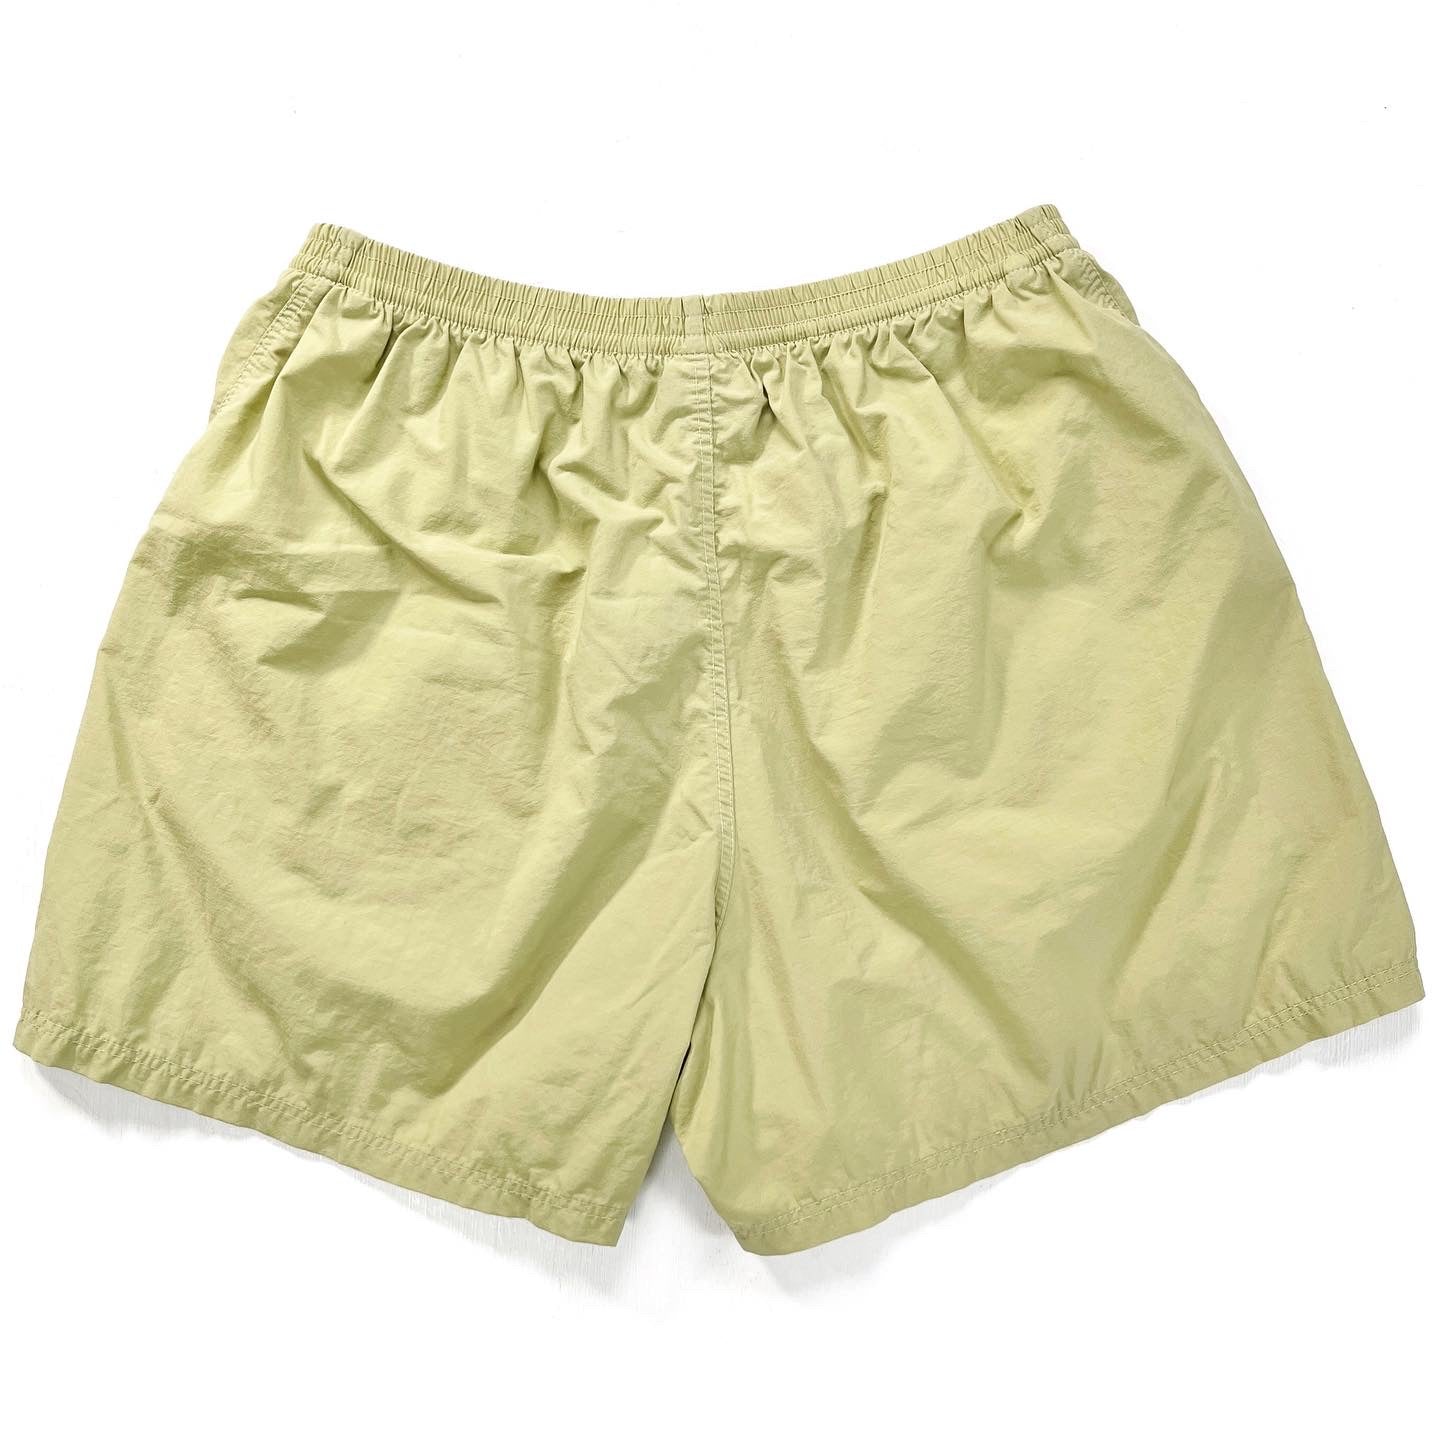 2002 Patagonia Mens 5” Nylon Baggies Shorts, Light Green (L)